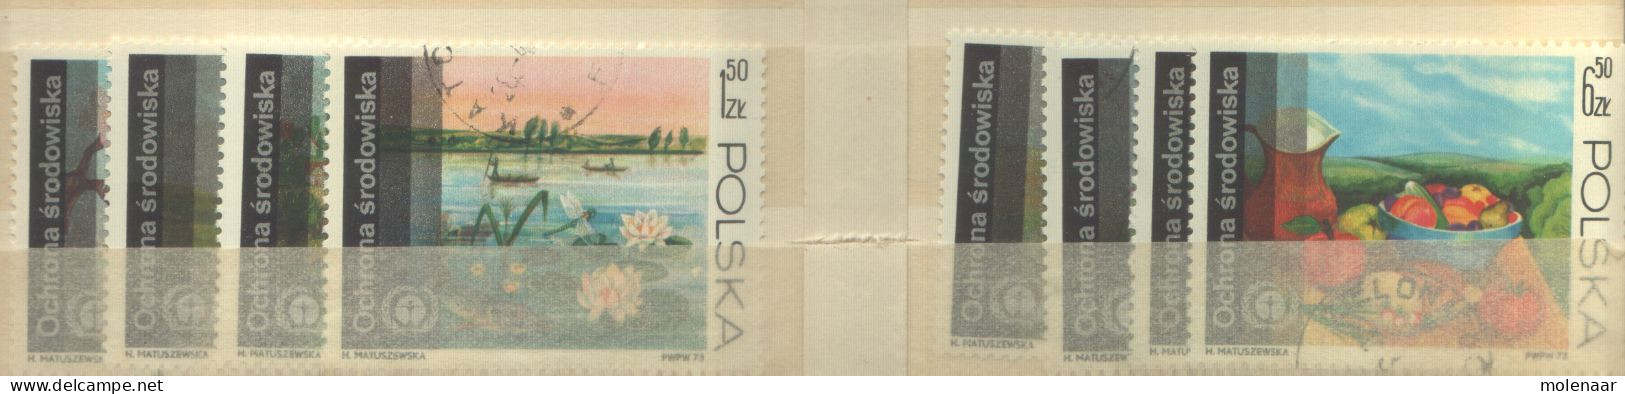 Postzegels > Europa > Polen > 1944-.... Republiek > 1971-80 > Gebruikt No. 2262-2269 (12091) - Gebraucht